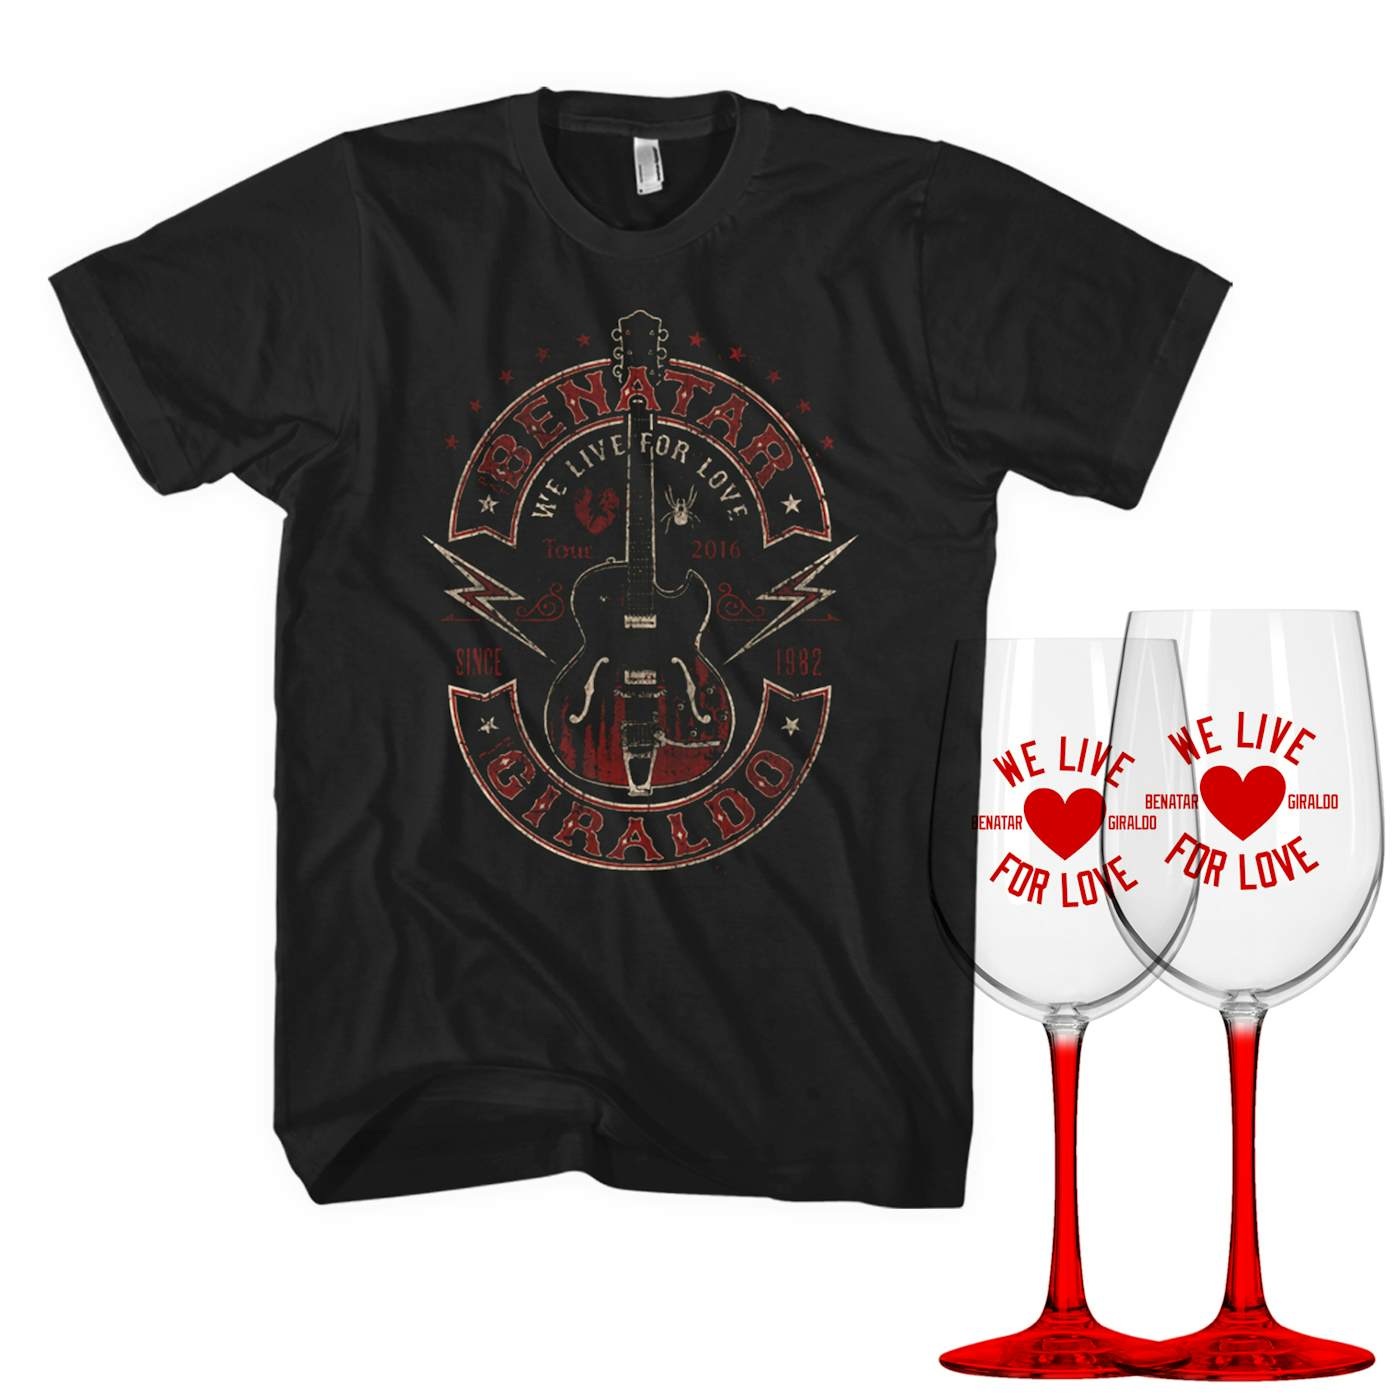 Pat Benatar Live For Love Tee & Wine Glass SetWas:$44.90